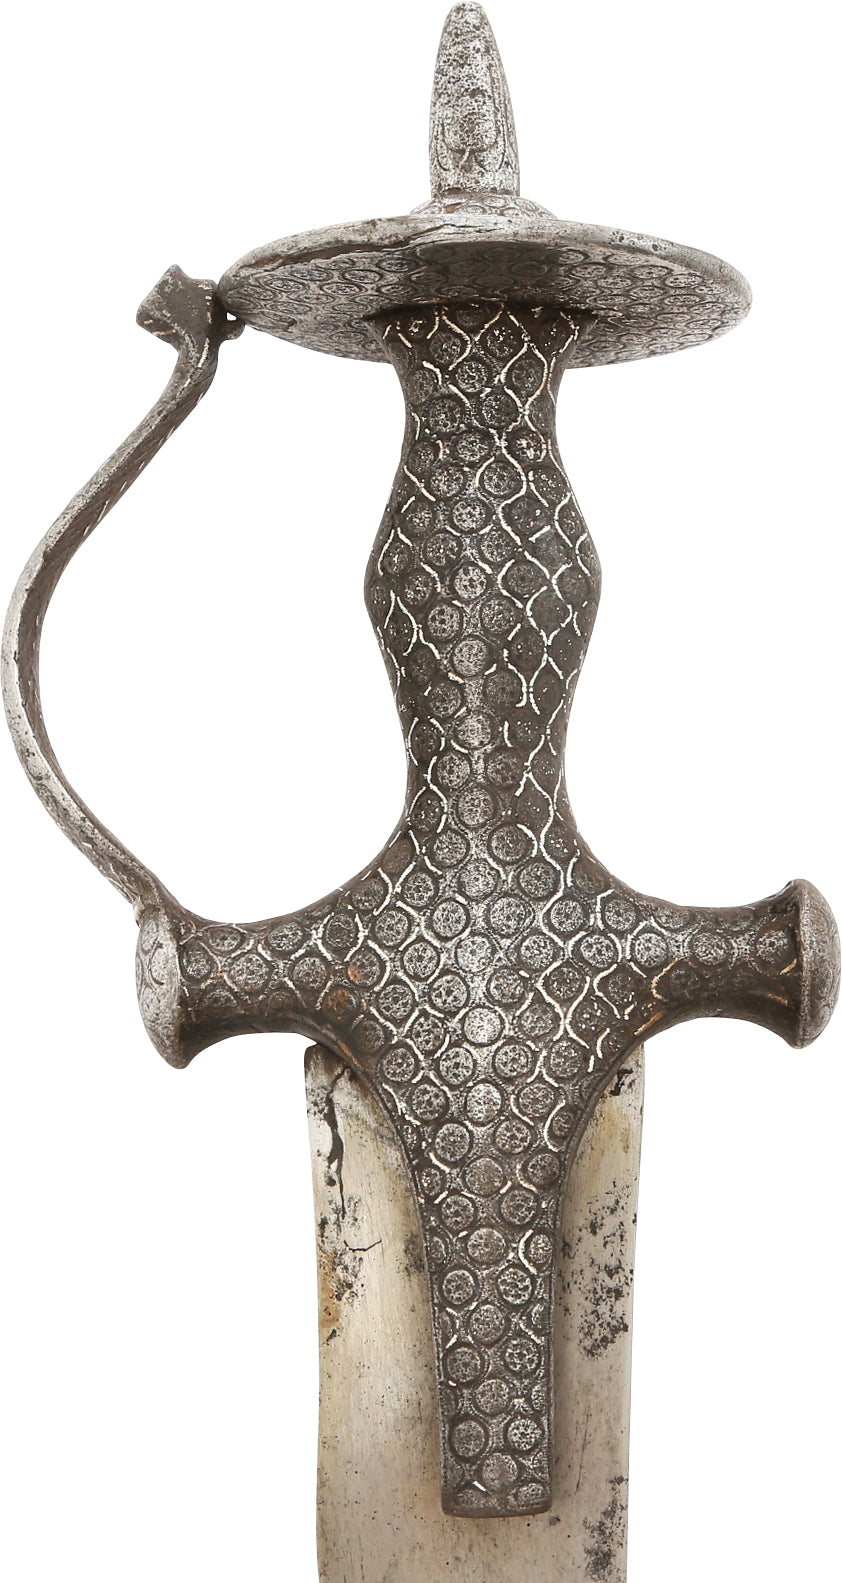 INDOPERSIAN HORSEMAN’S SWORD, 17th-18th CENTURY - Fagan Arms